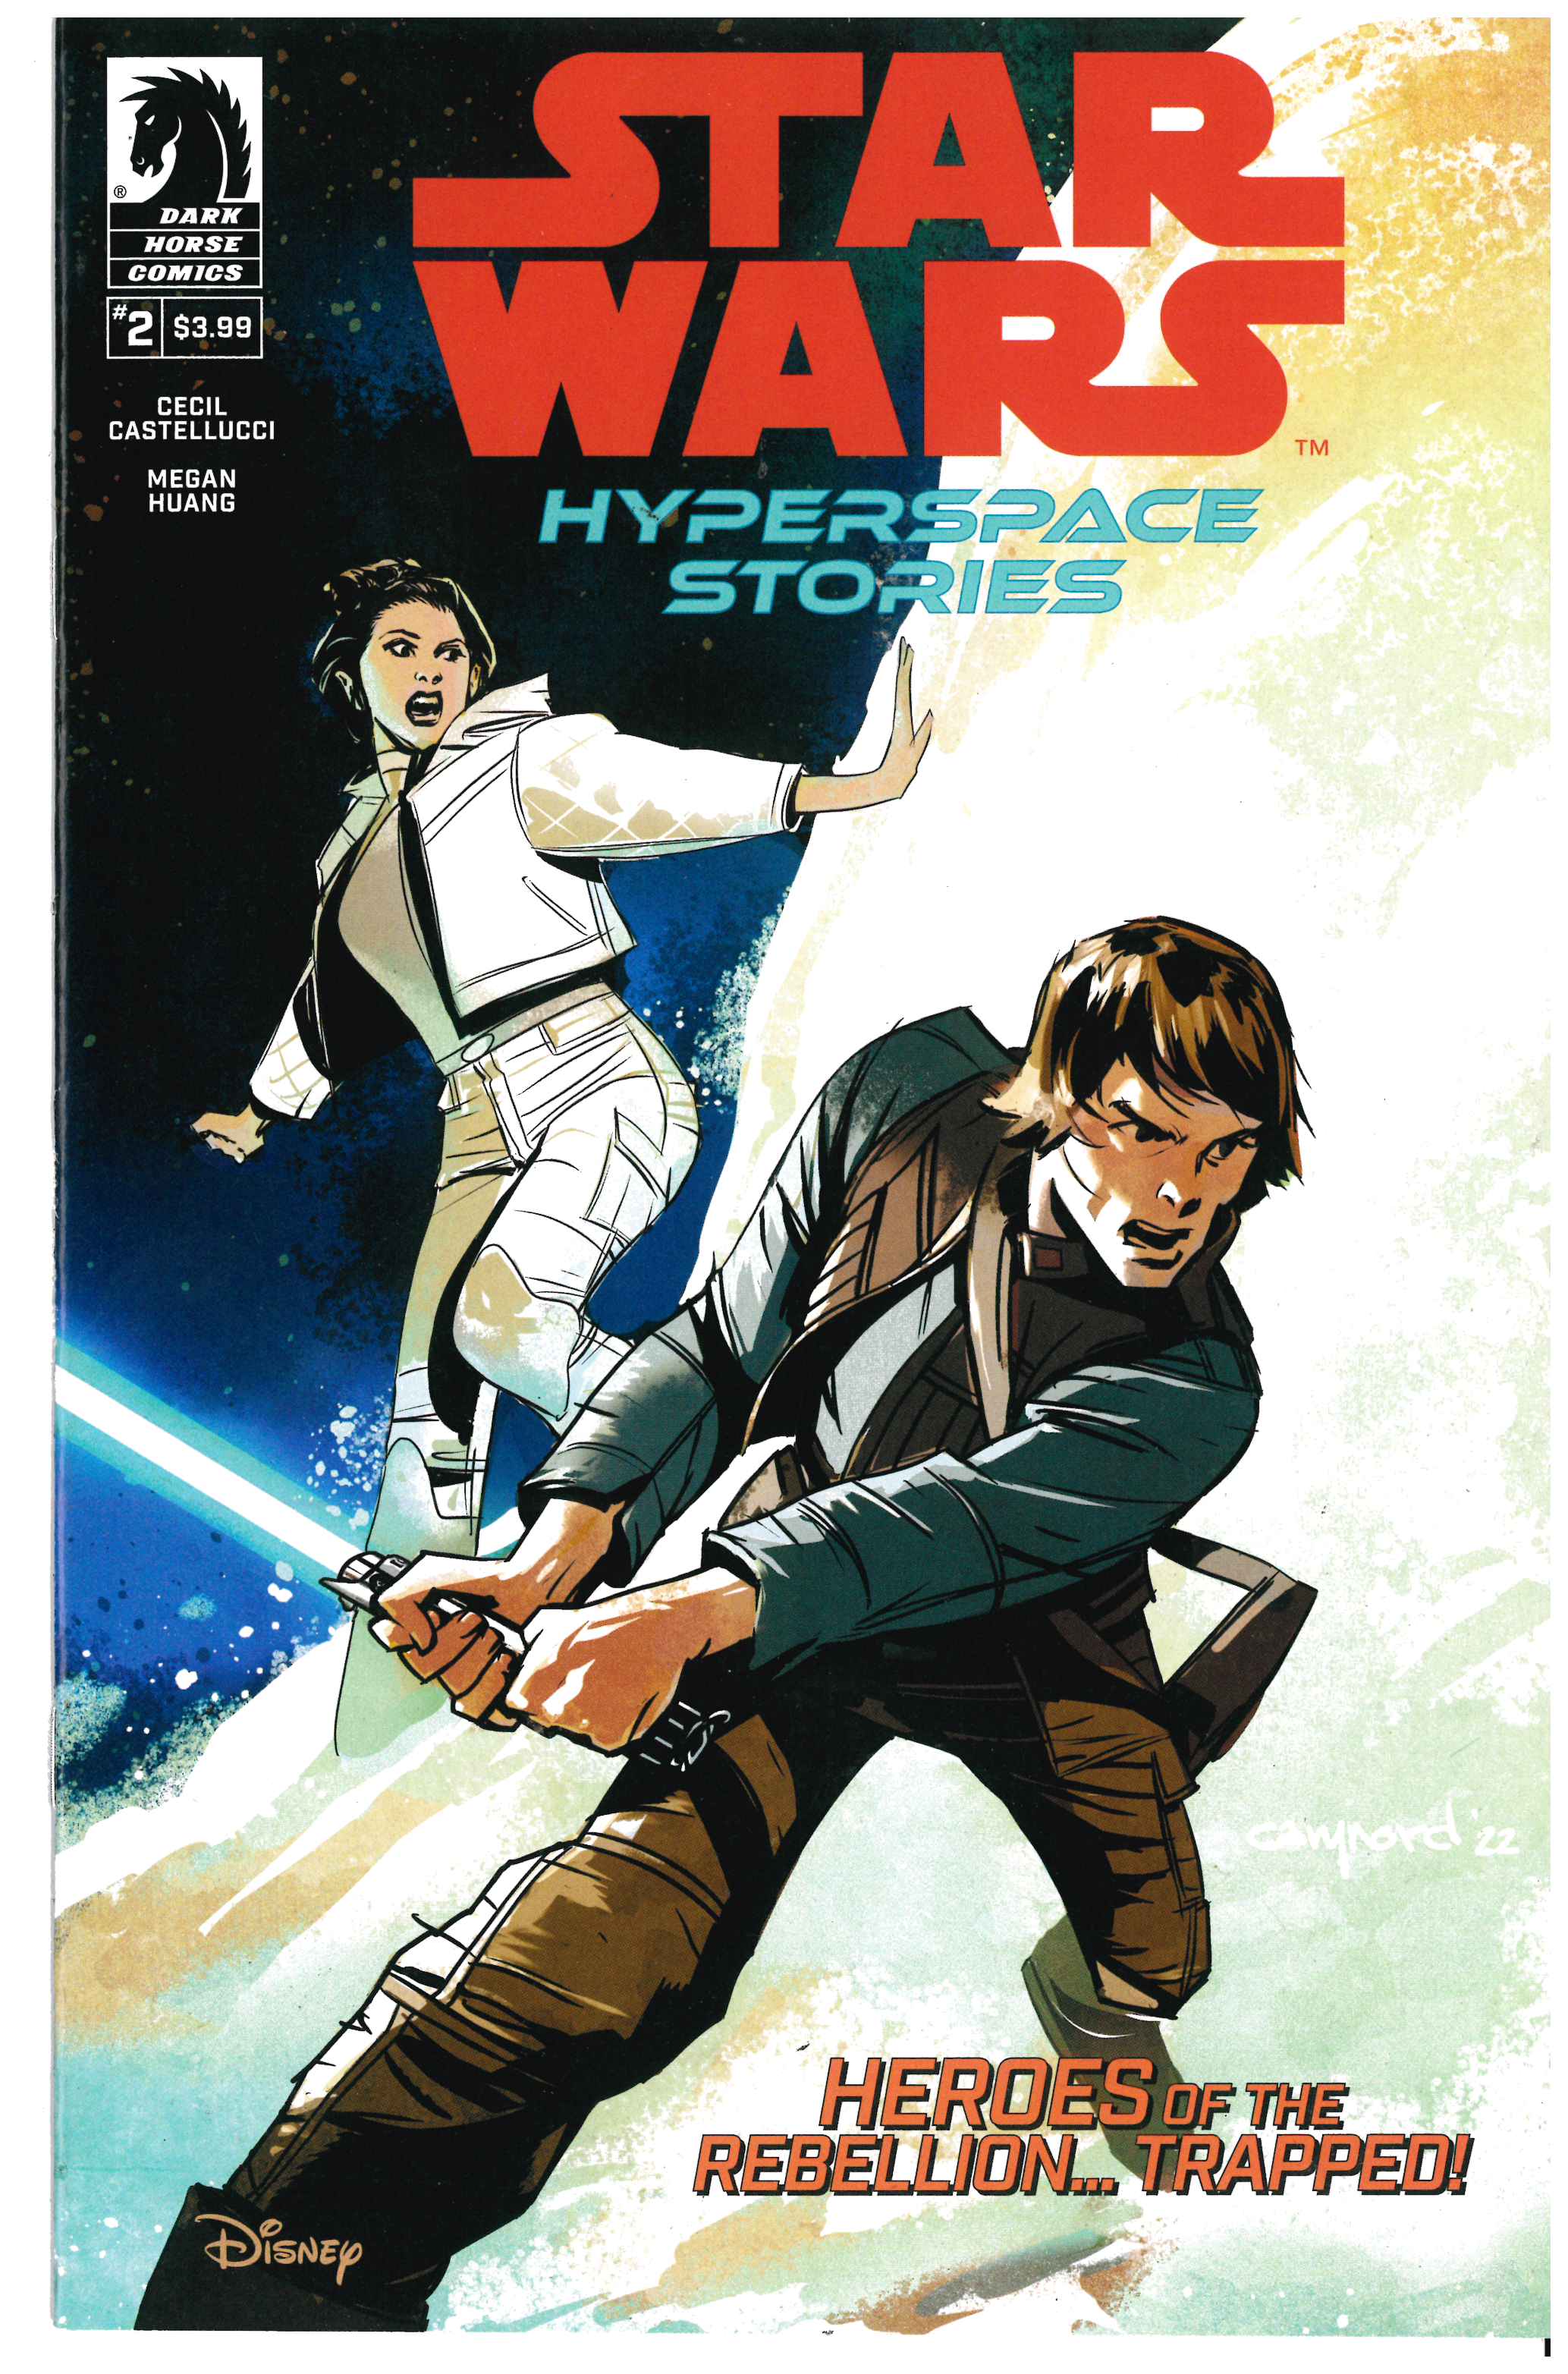 Star Wars: Hyperspace Stories #2